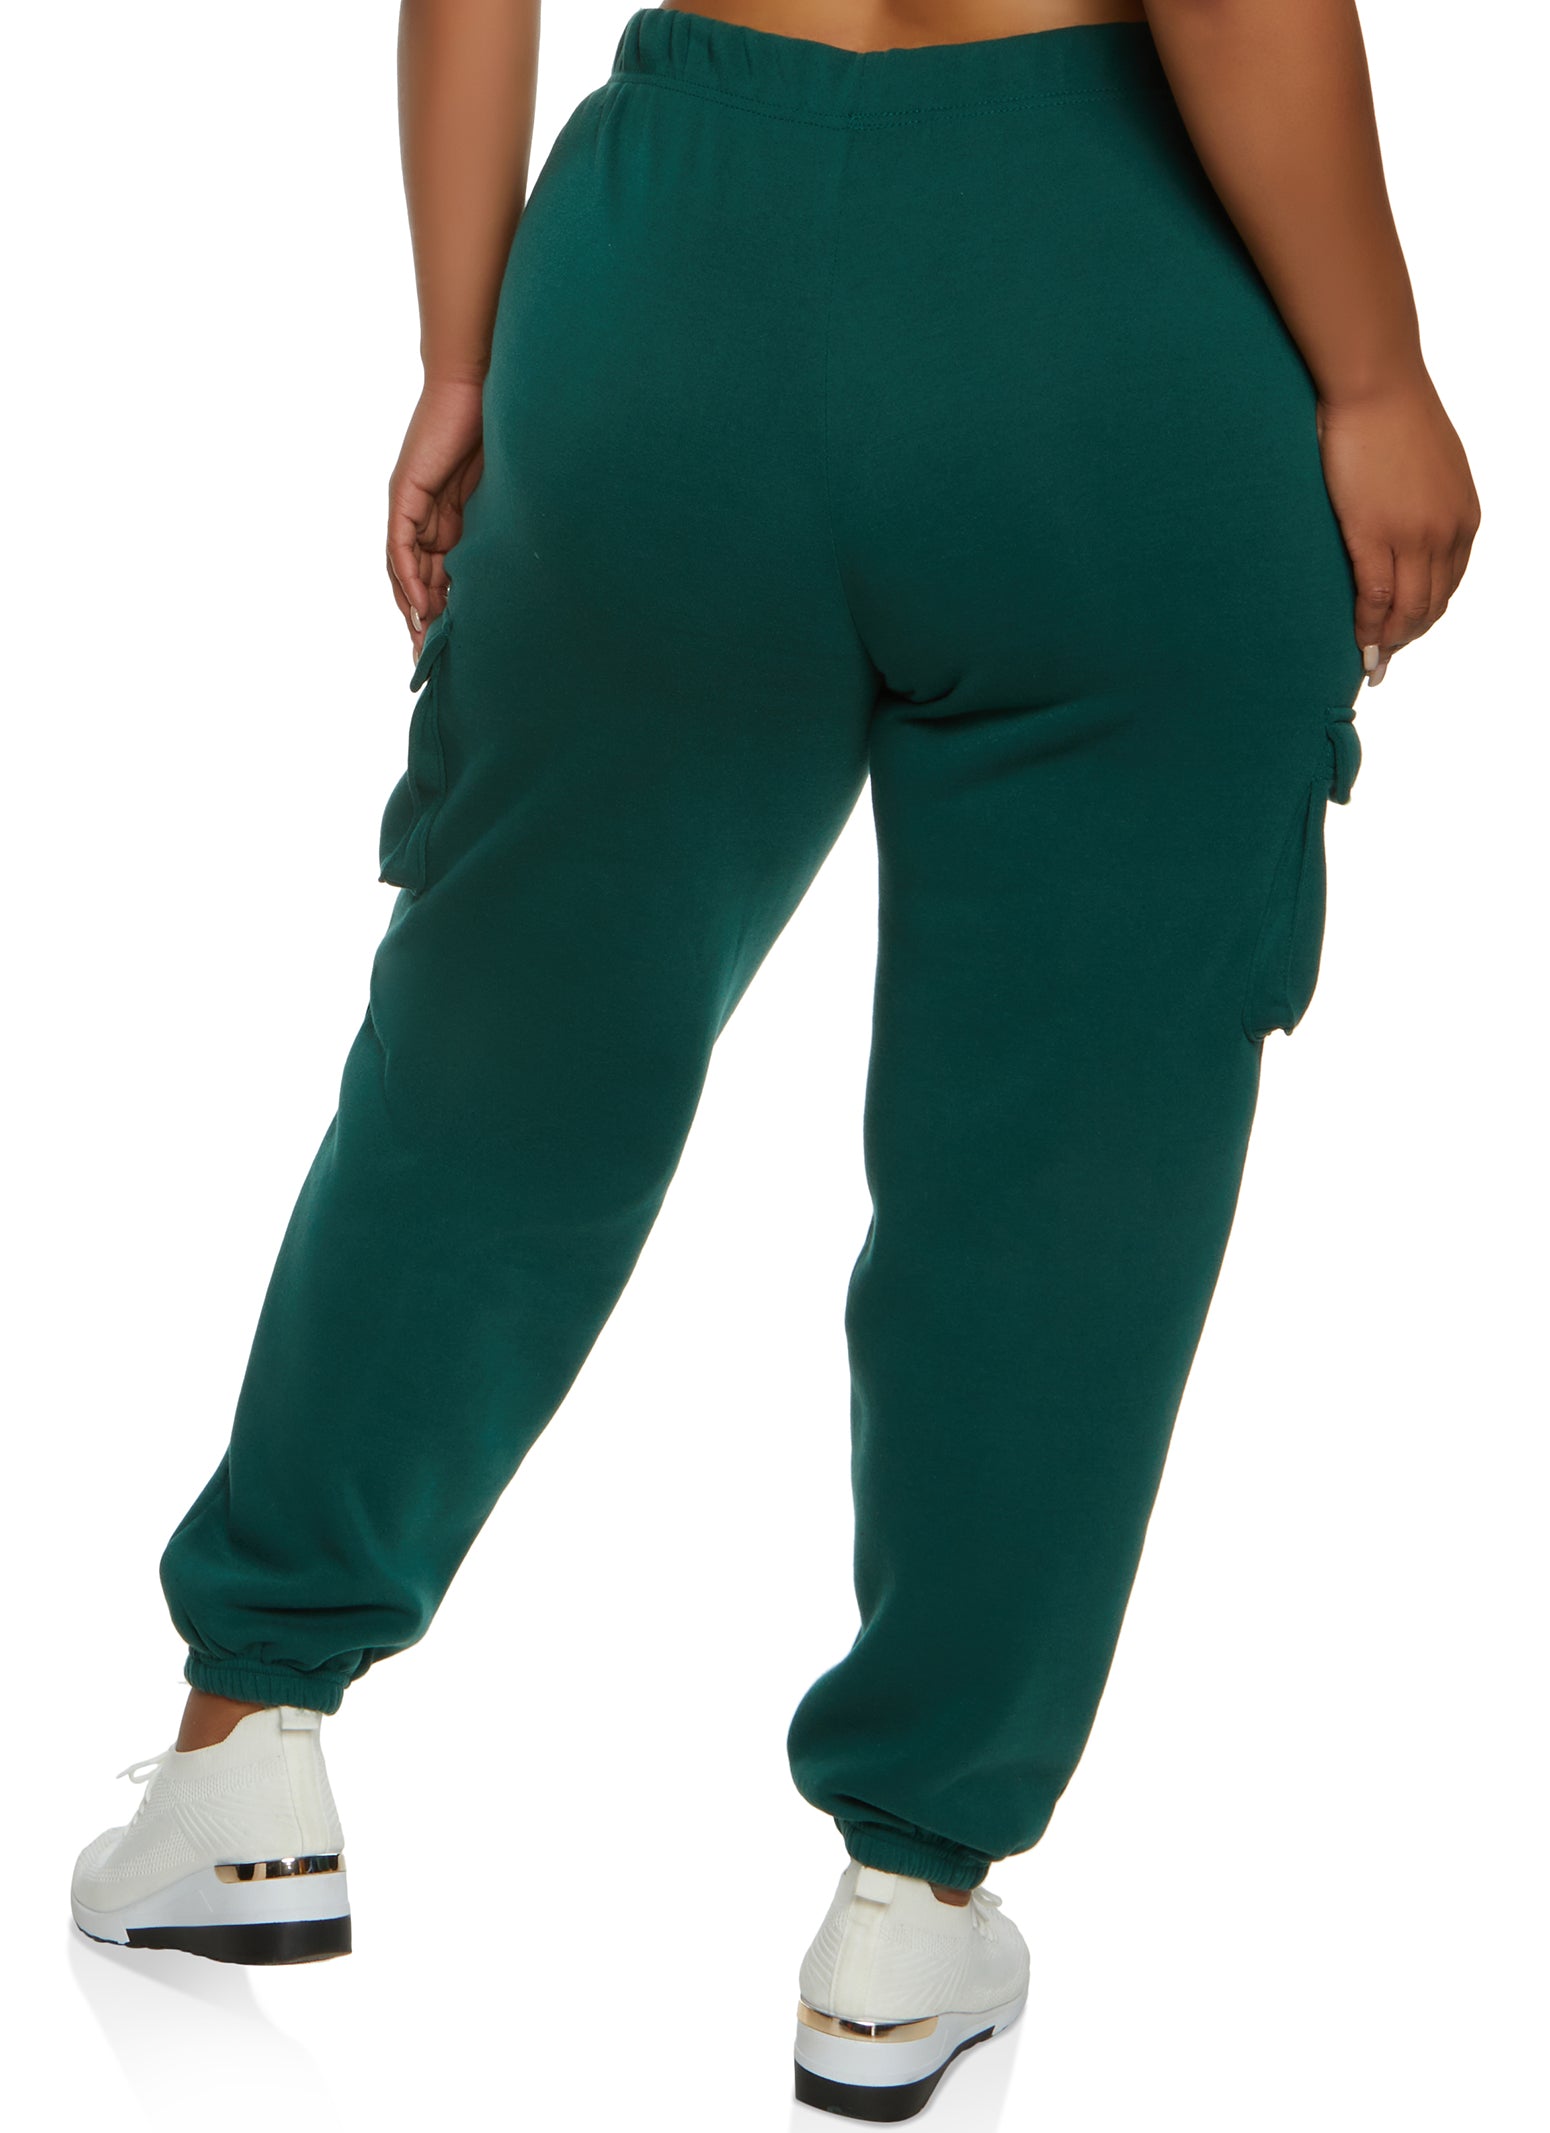 Cargo Sweatpants for Women, Plus Size High Waist Athletic Pants